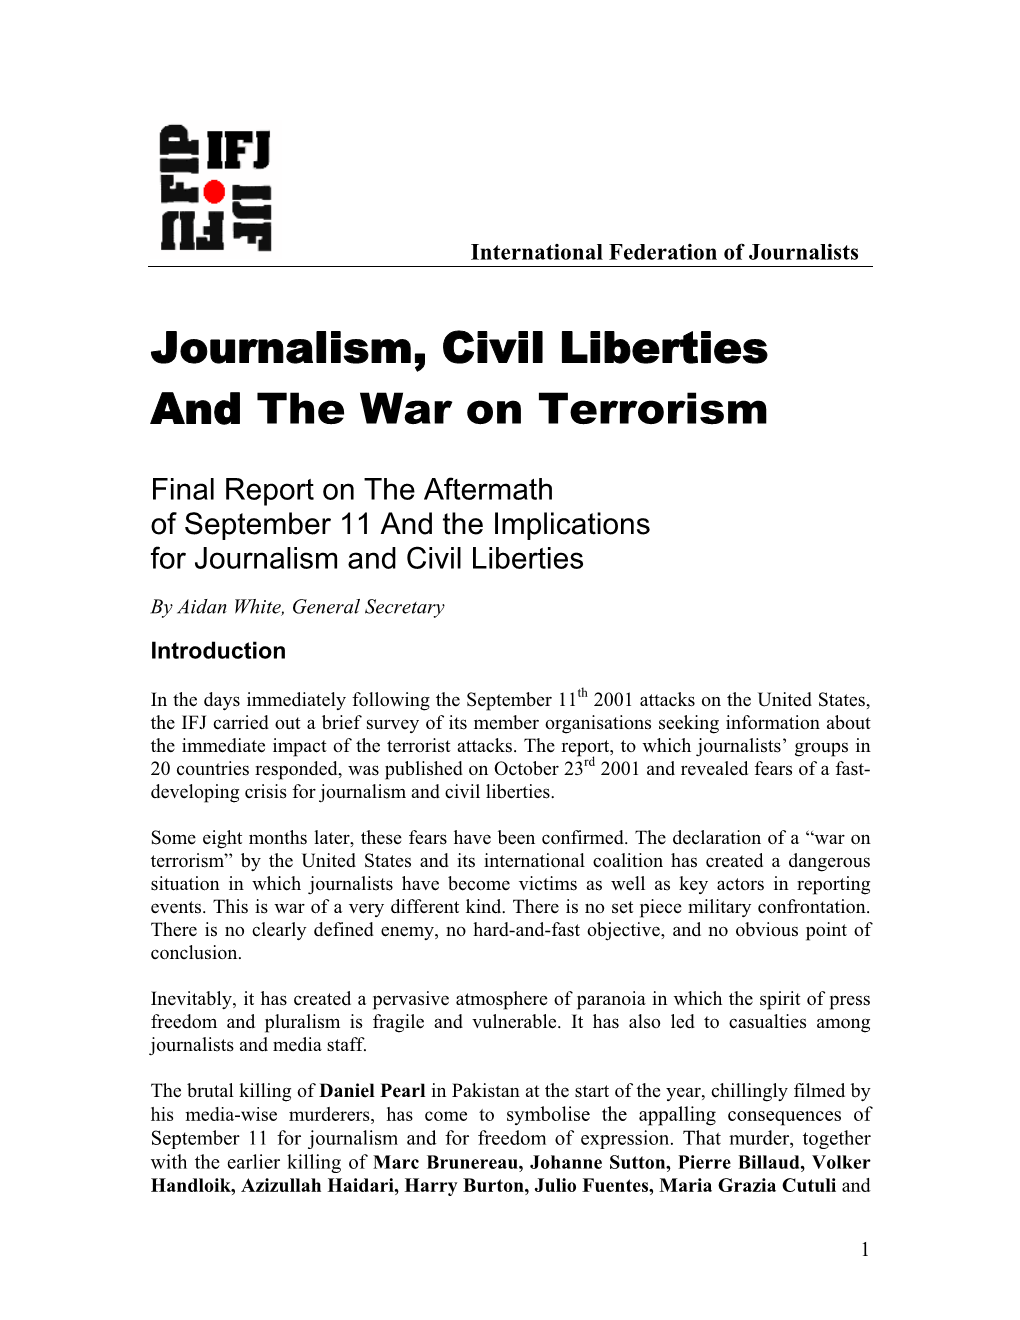 Journalism, Civil Liberties and the War on Terrorism